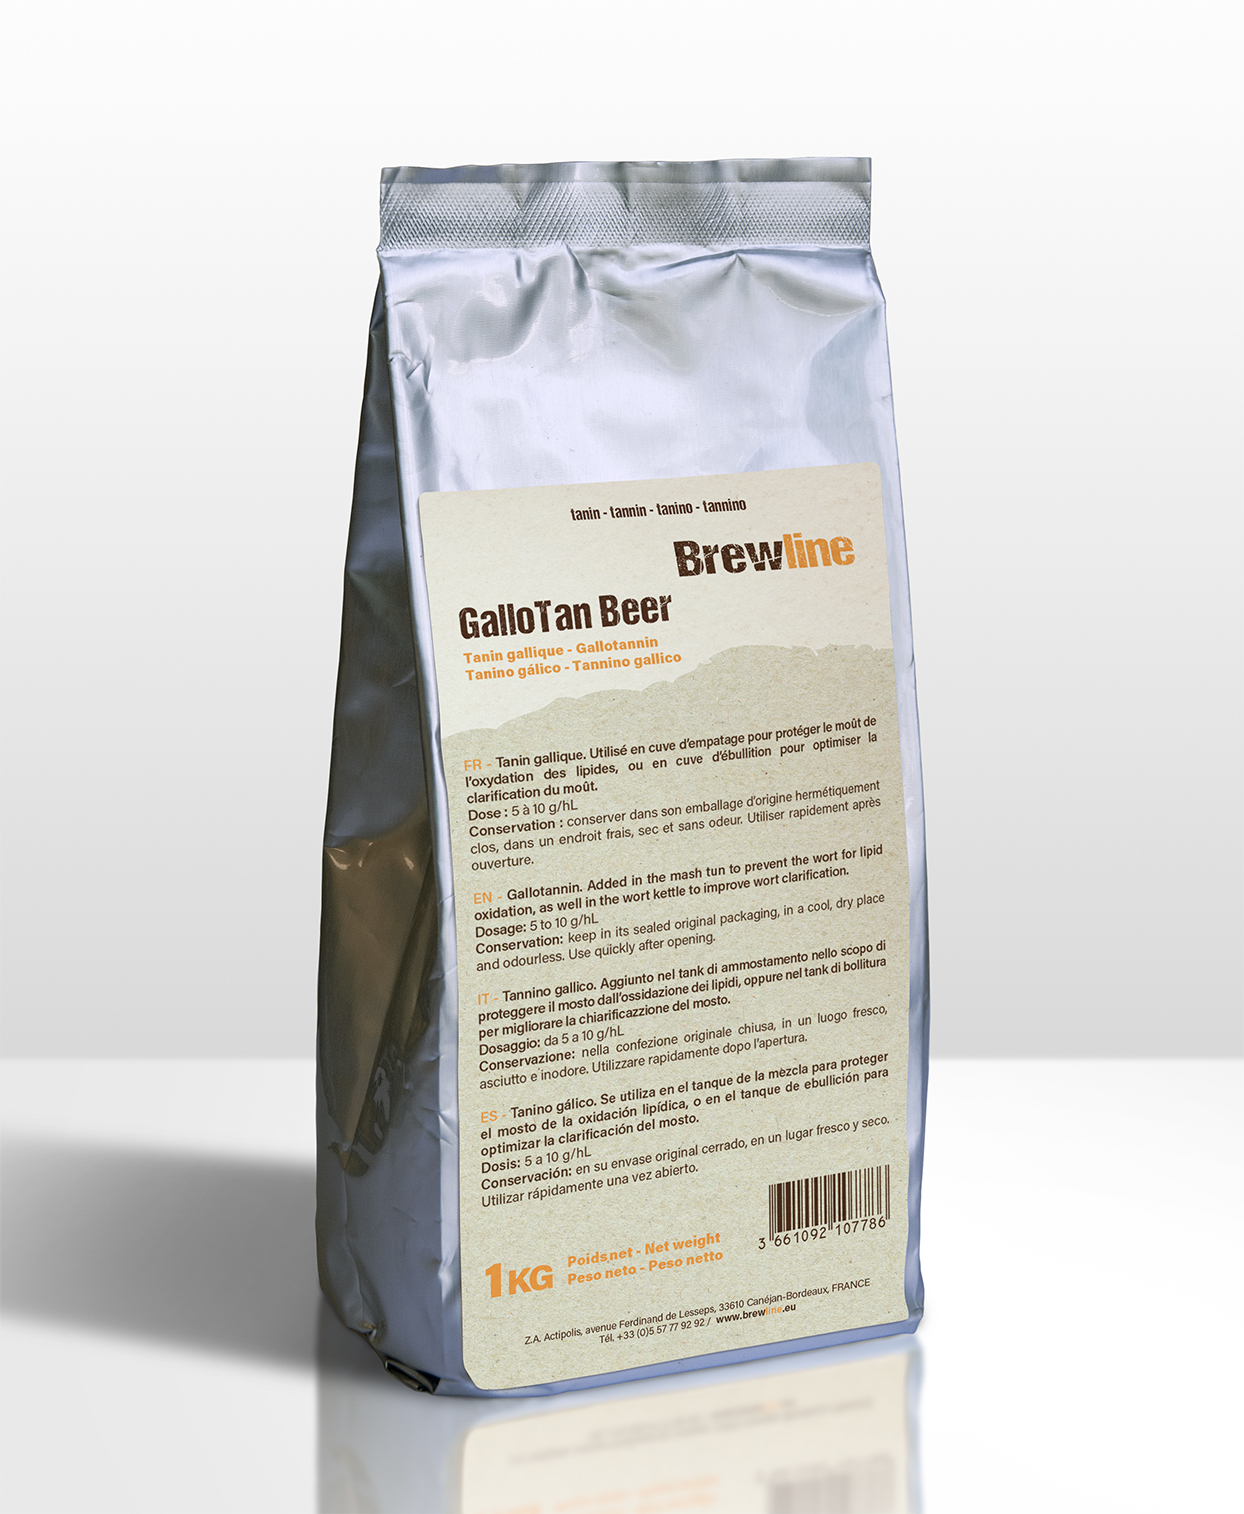 sachet de gallotan beer 1kg - antioxydant brewline à base de tanin gallique